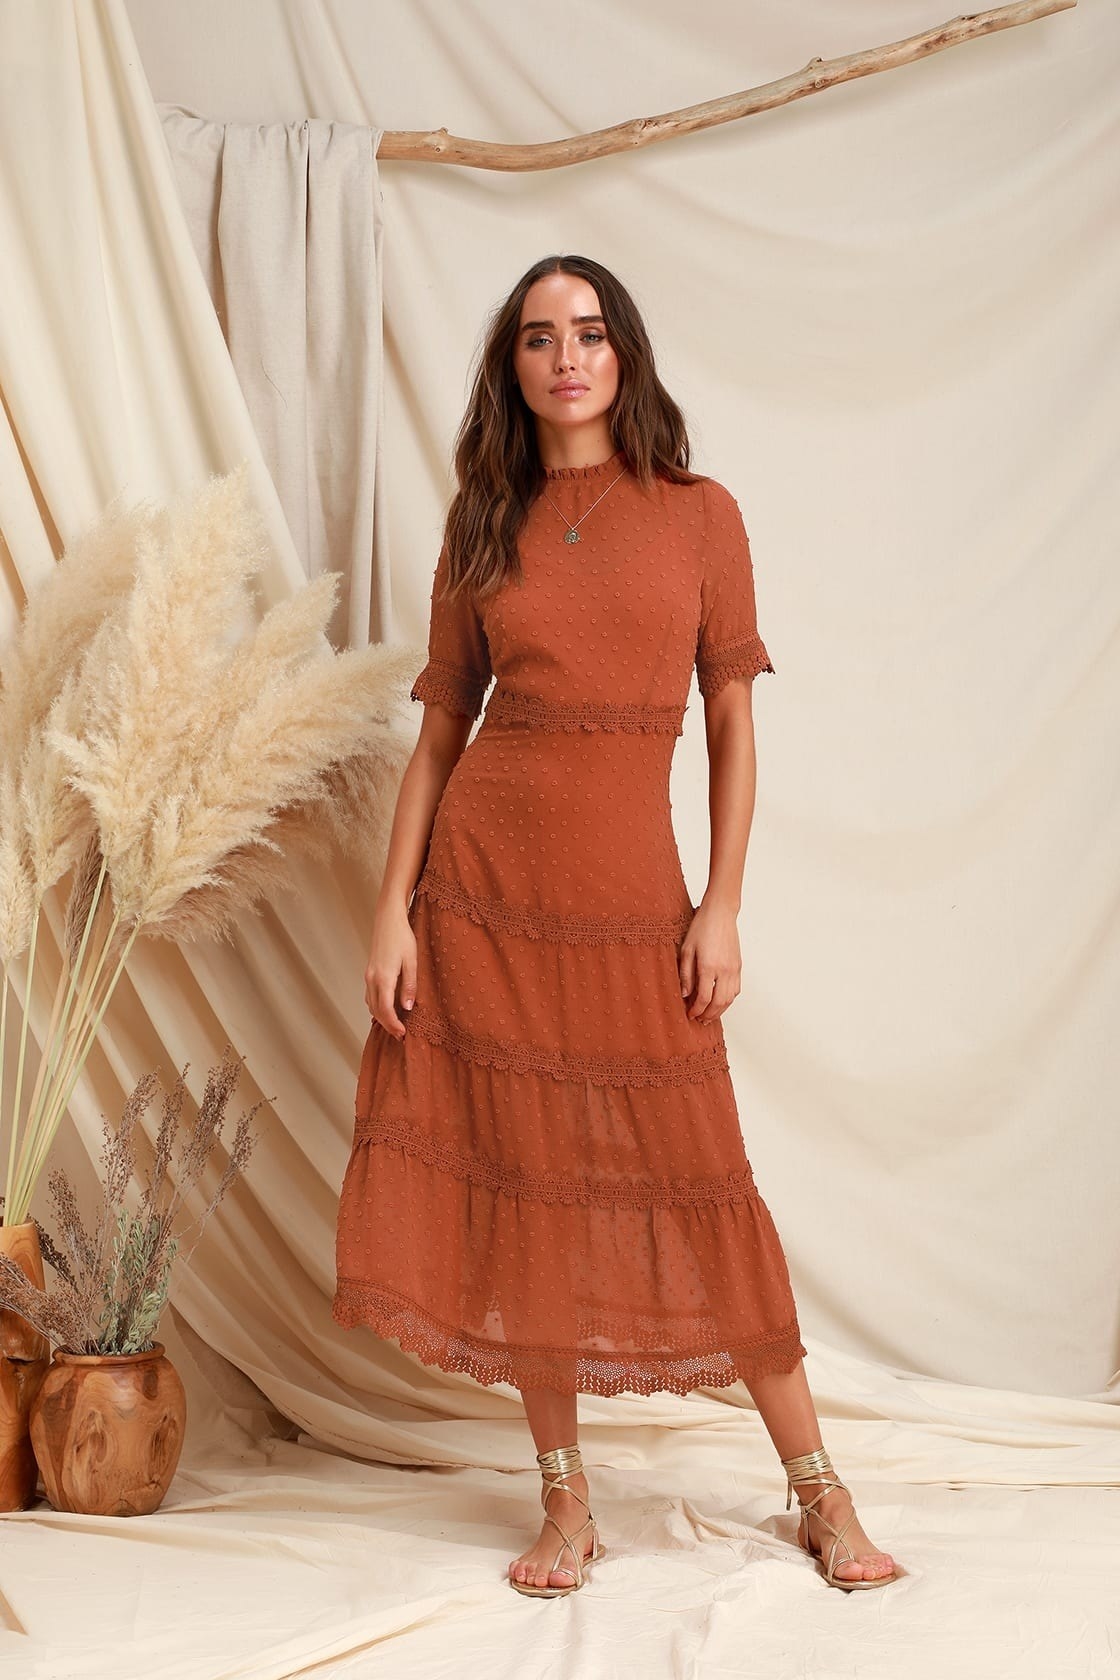 the model wearing the rust orange dress